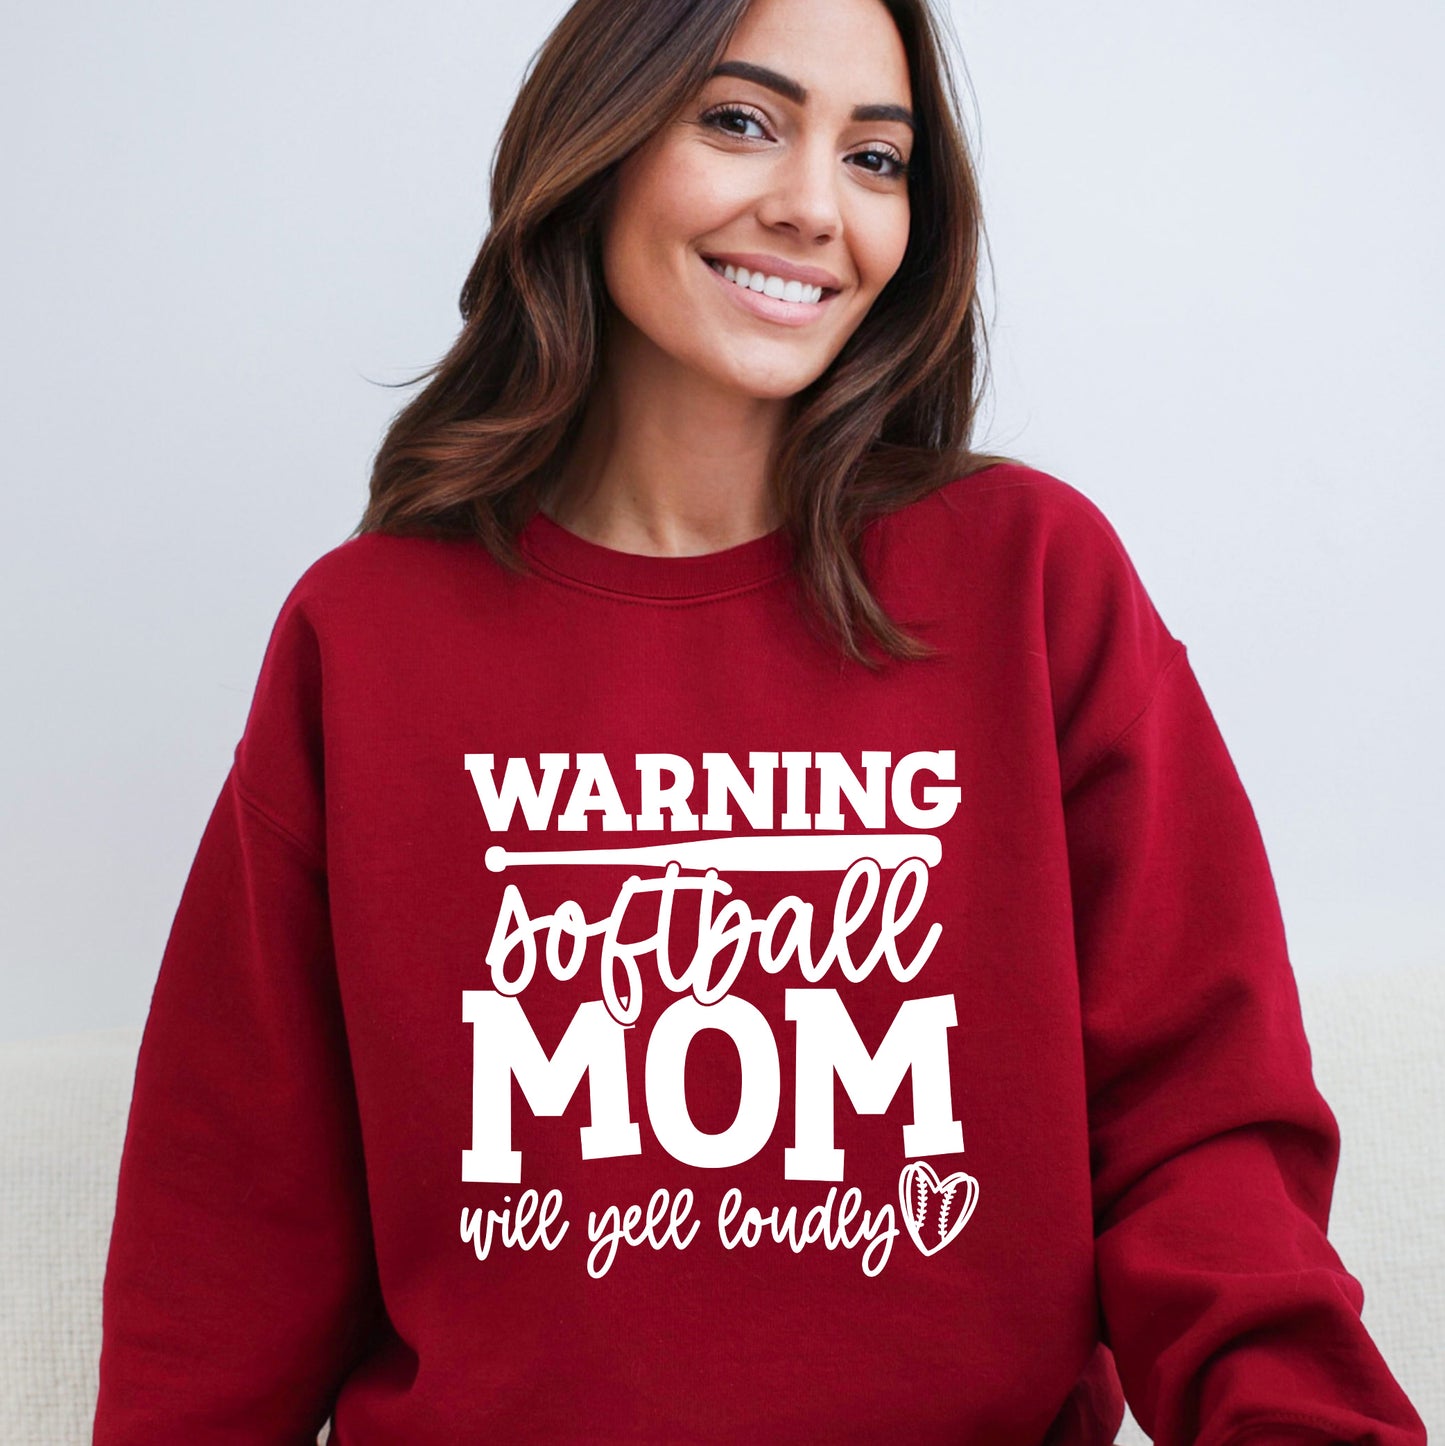 Warning Softball Mom | Sweatshirt